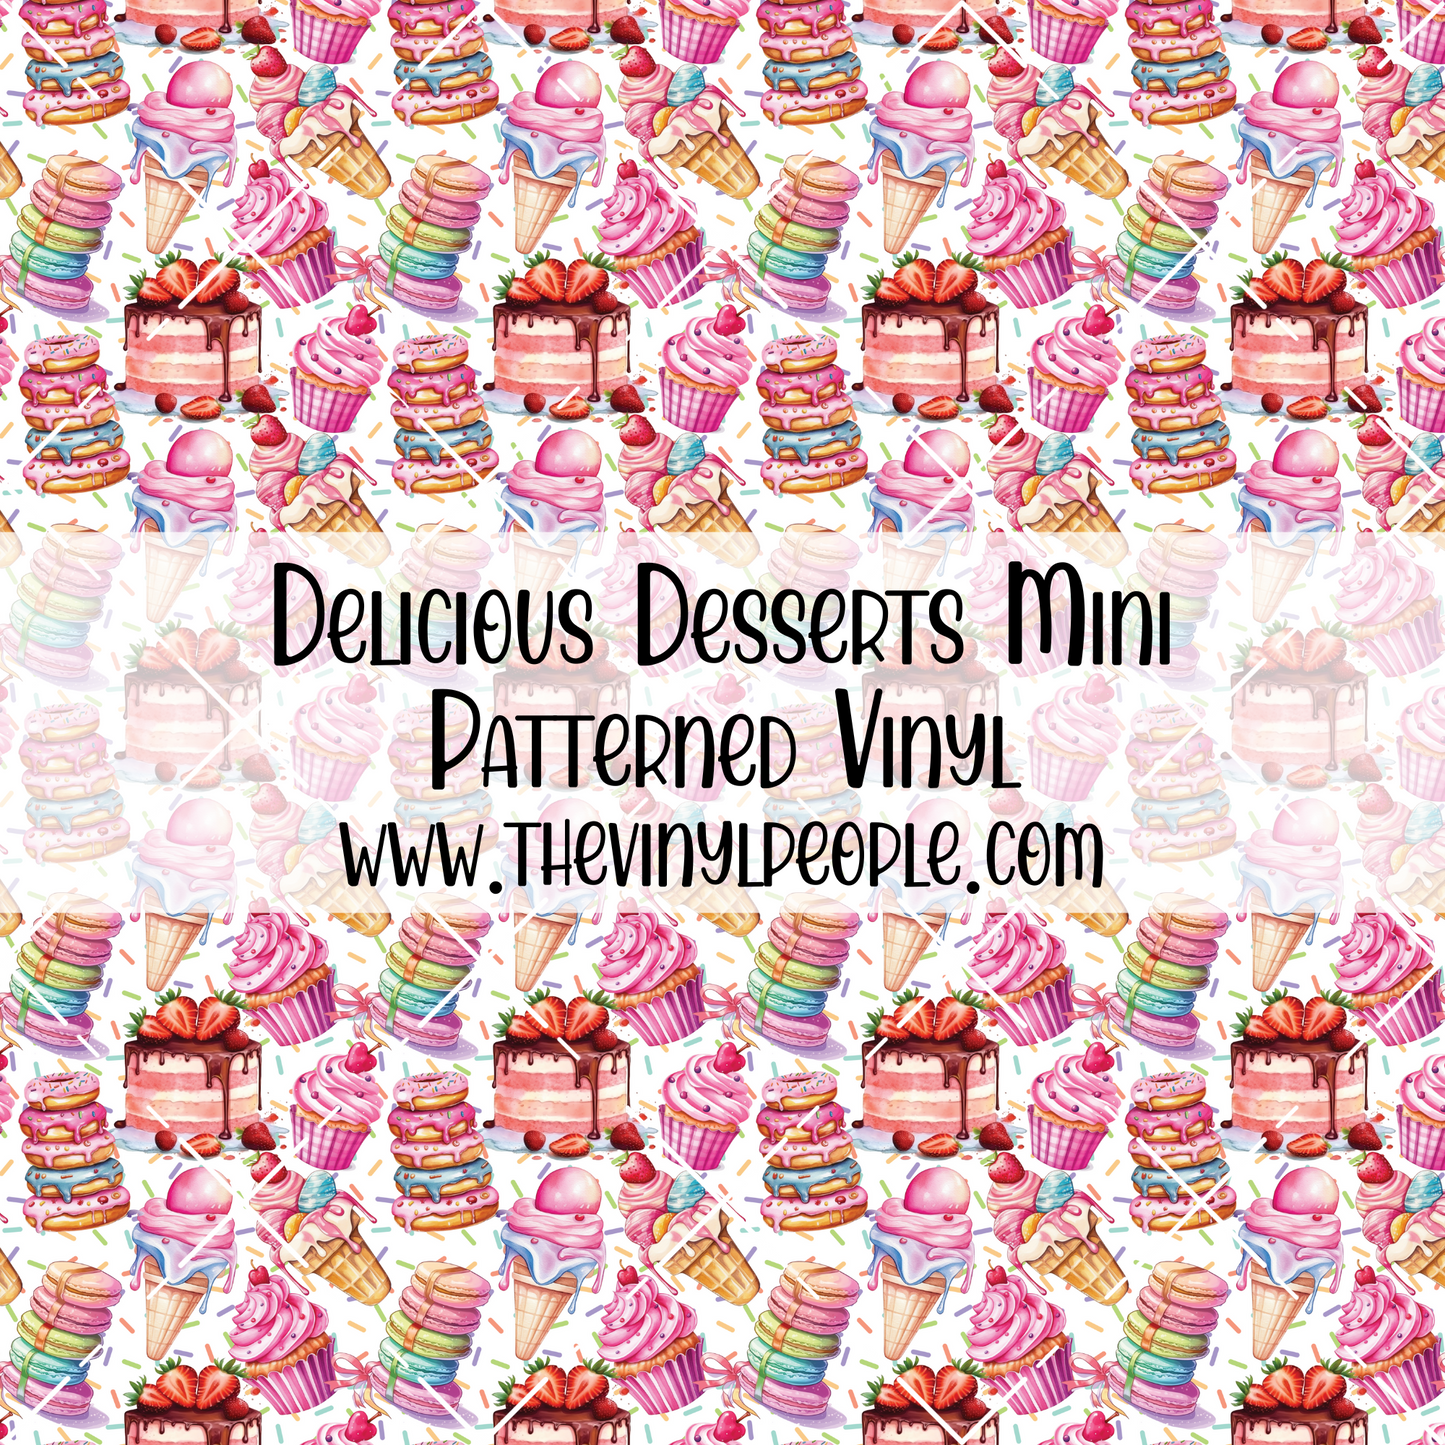 Delicious Desserts Patterned Vinyl